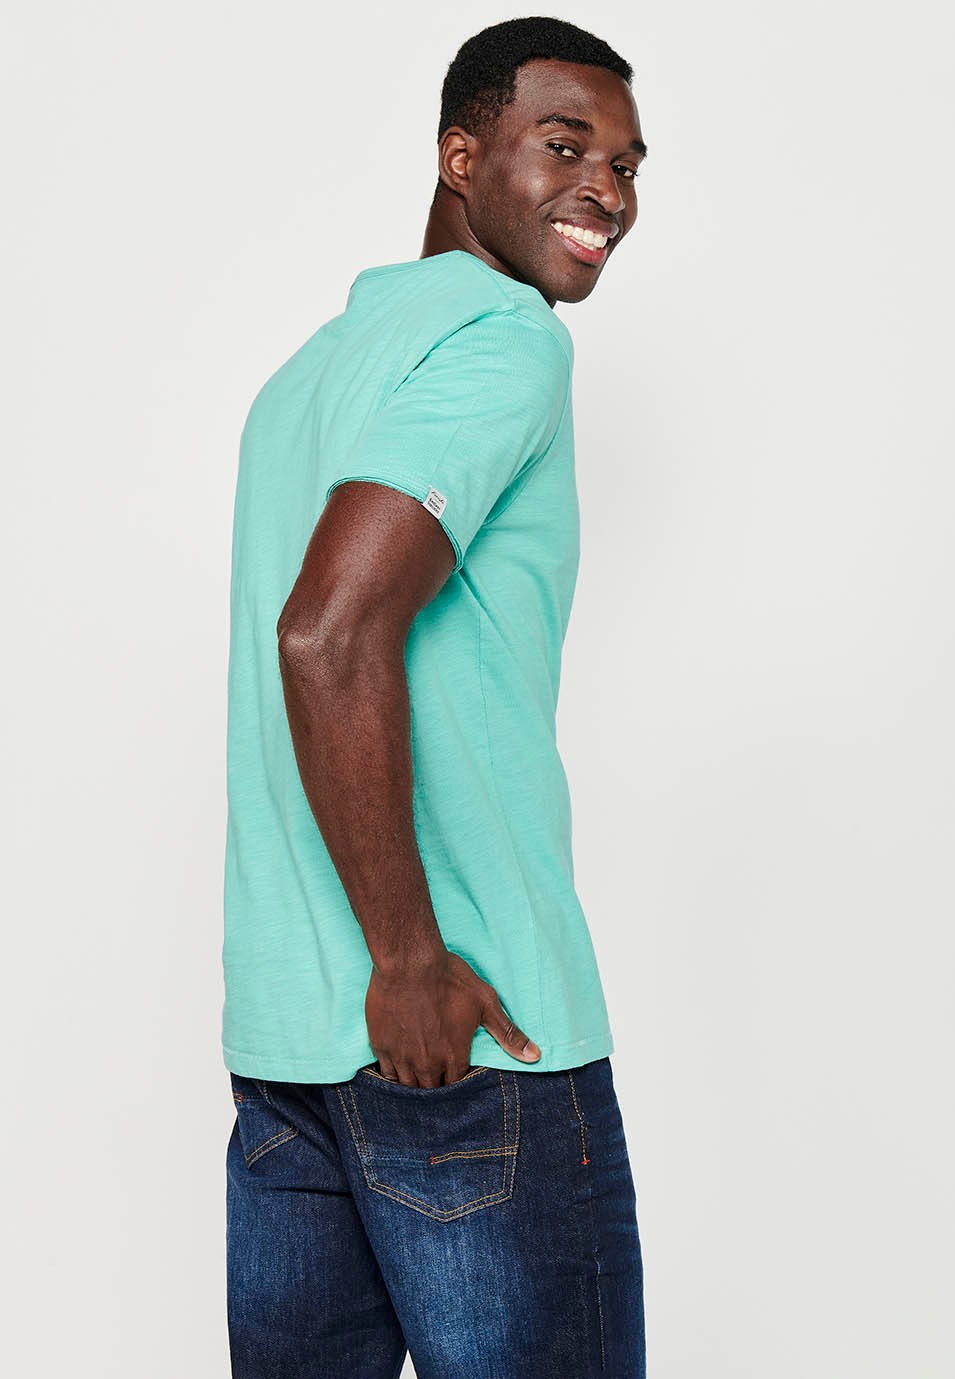 Basic short-sleeved cotton t-shirt, V-neck with button, mint color for men 6